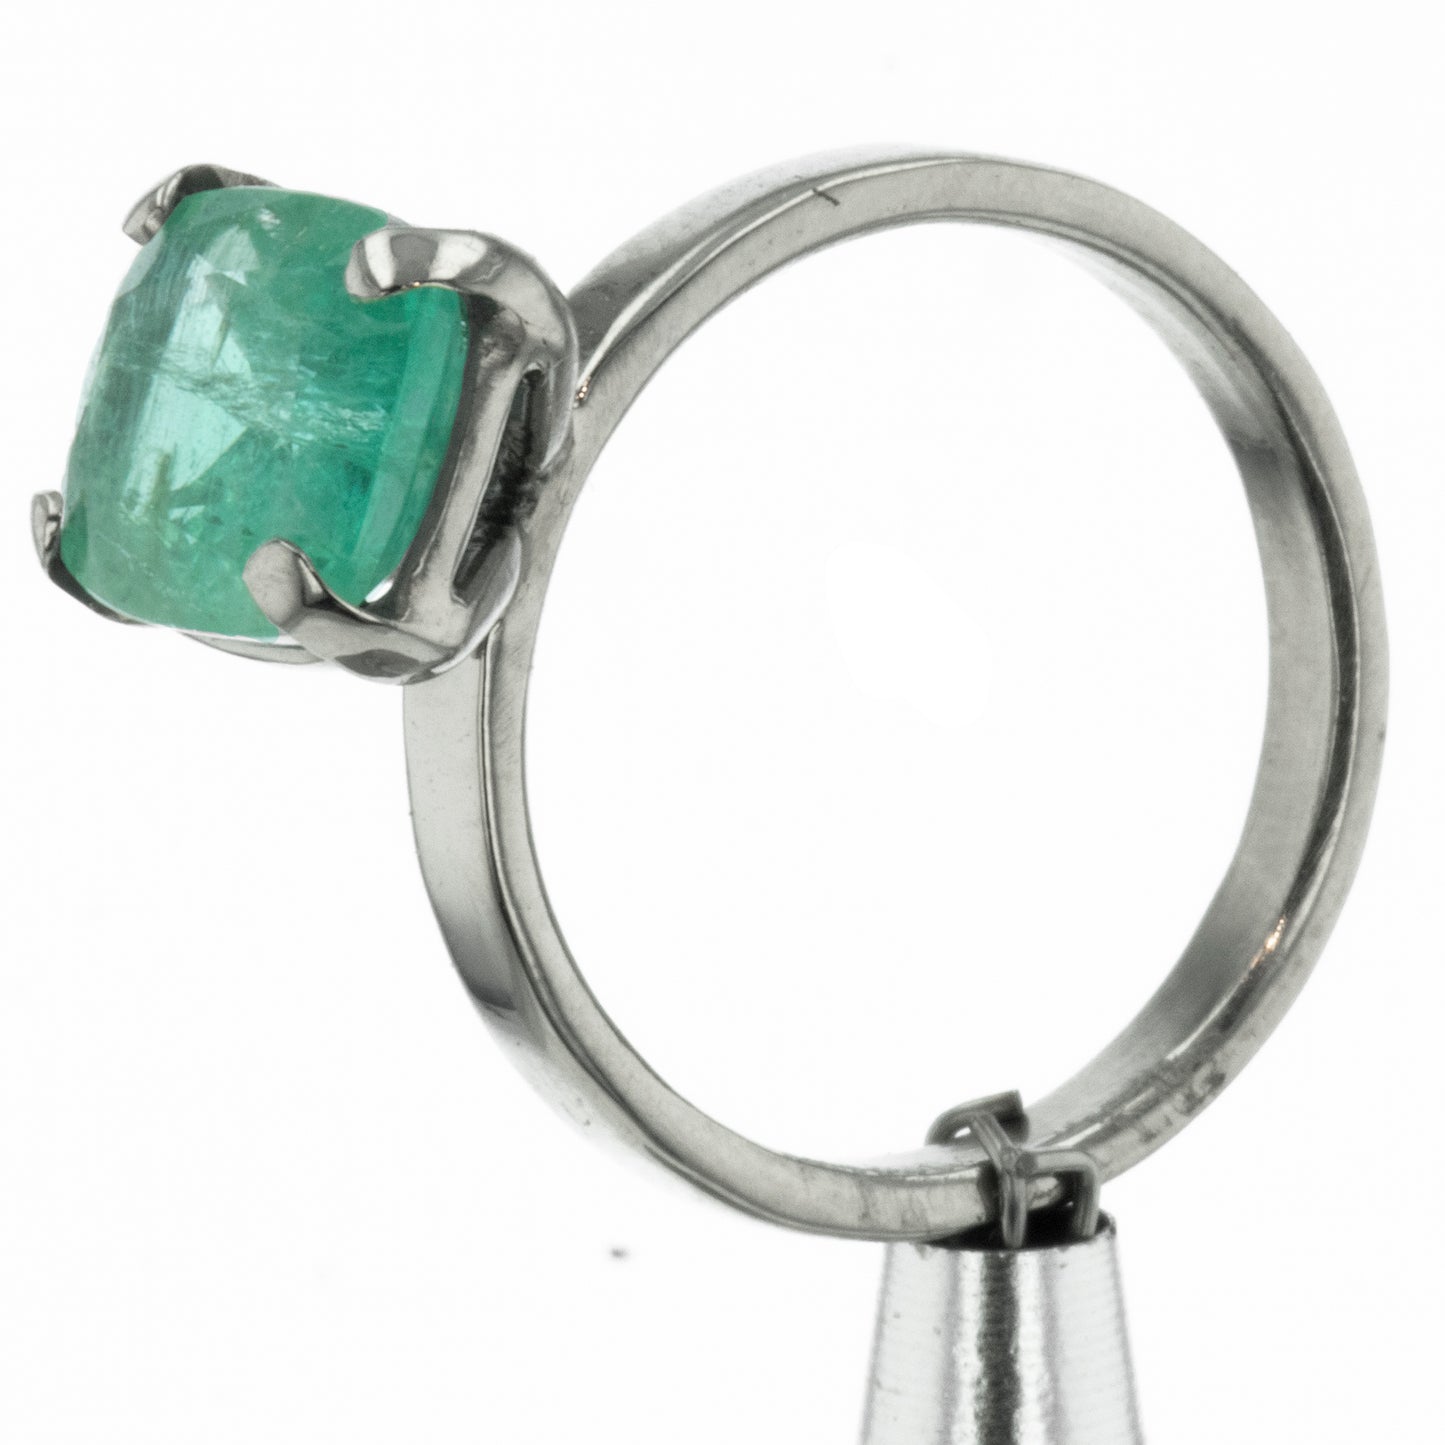 Columbian emerald ring